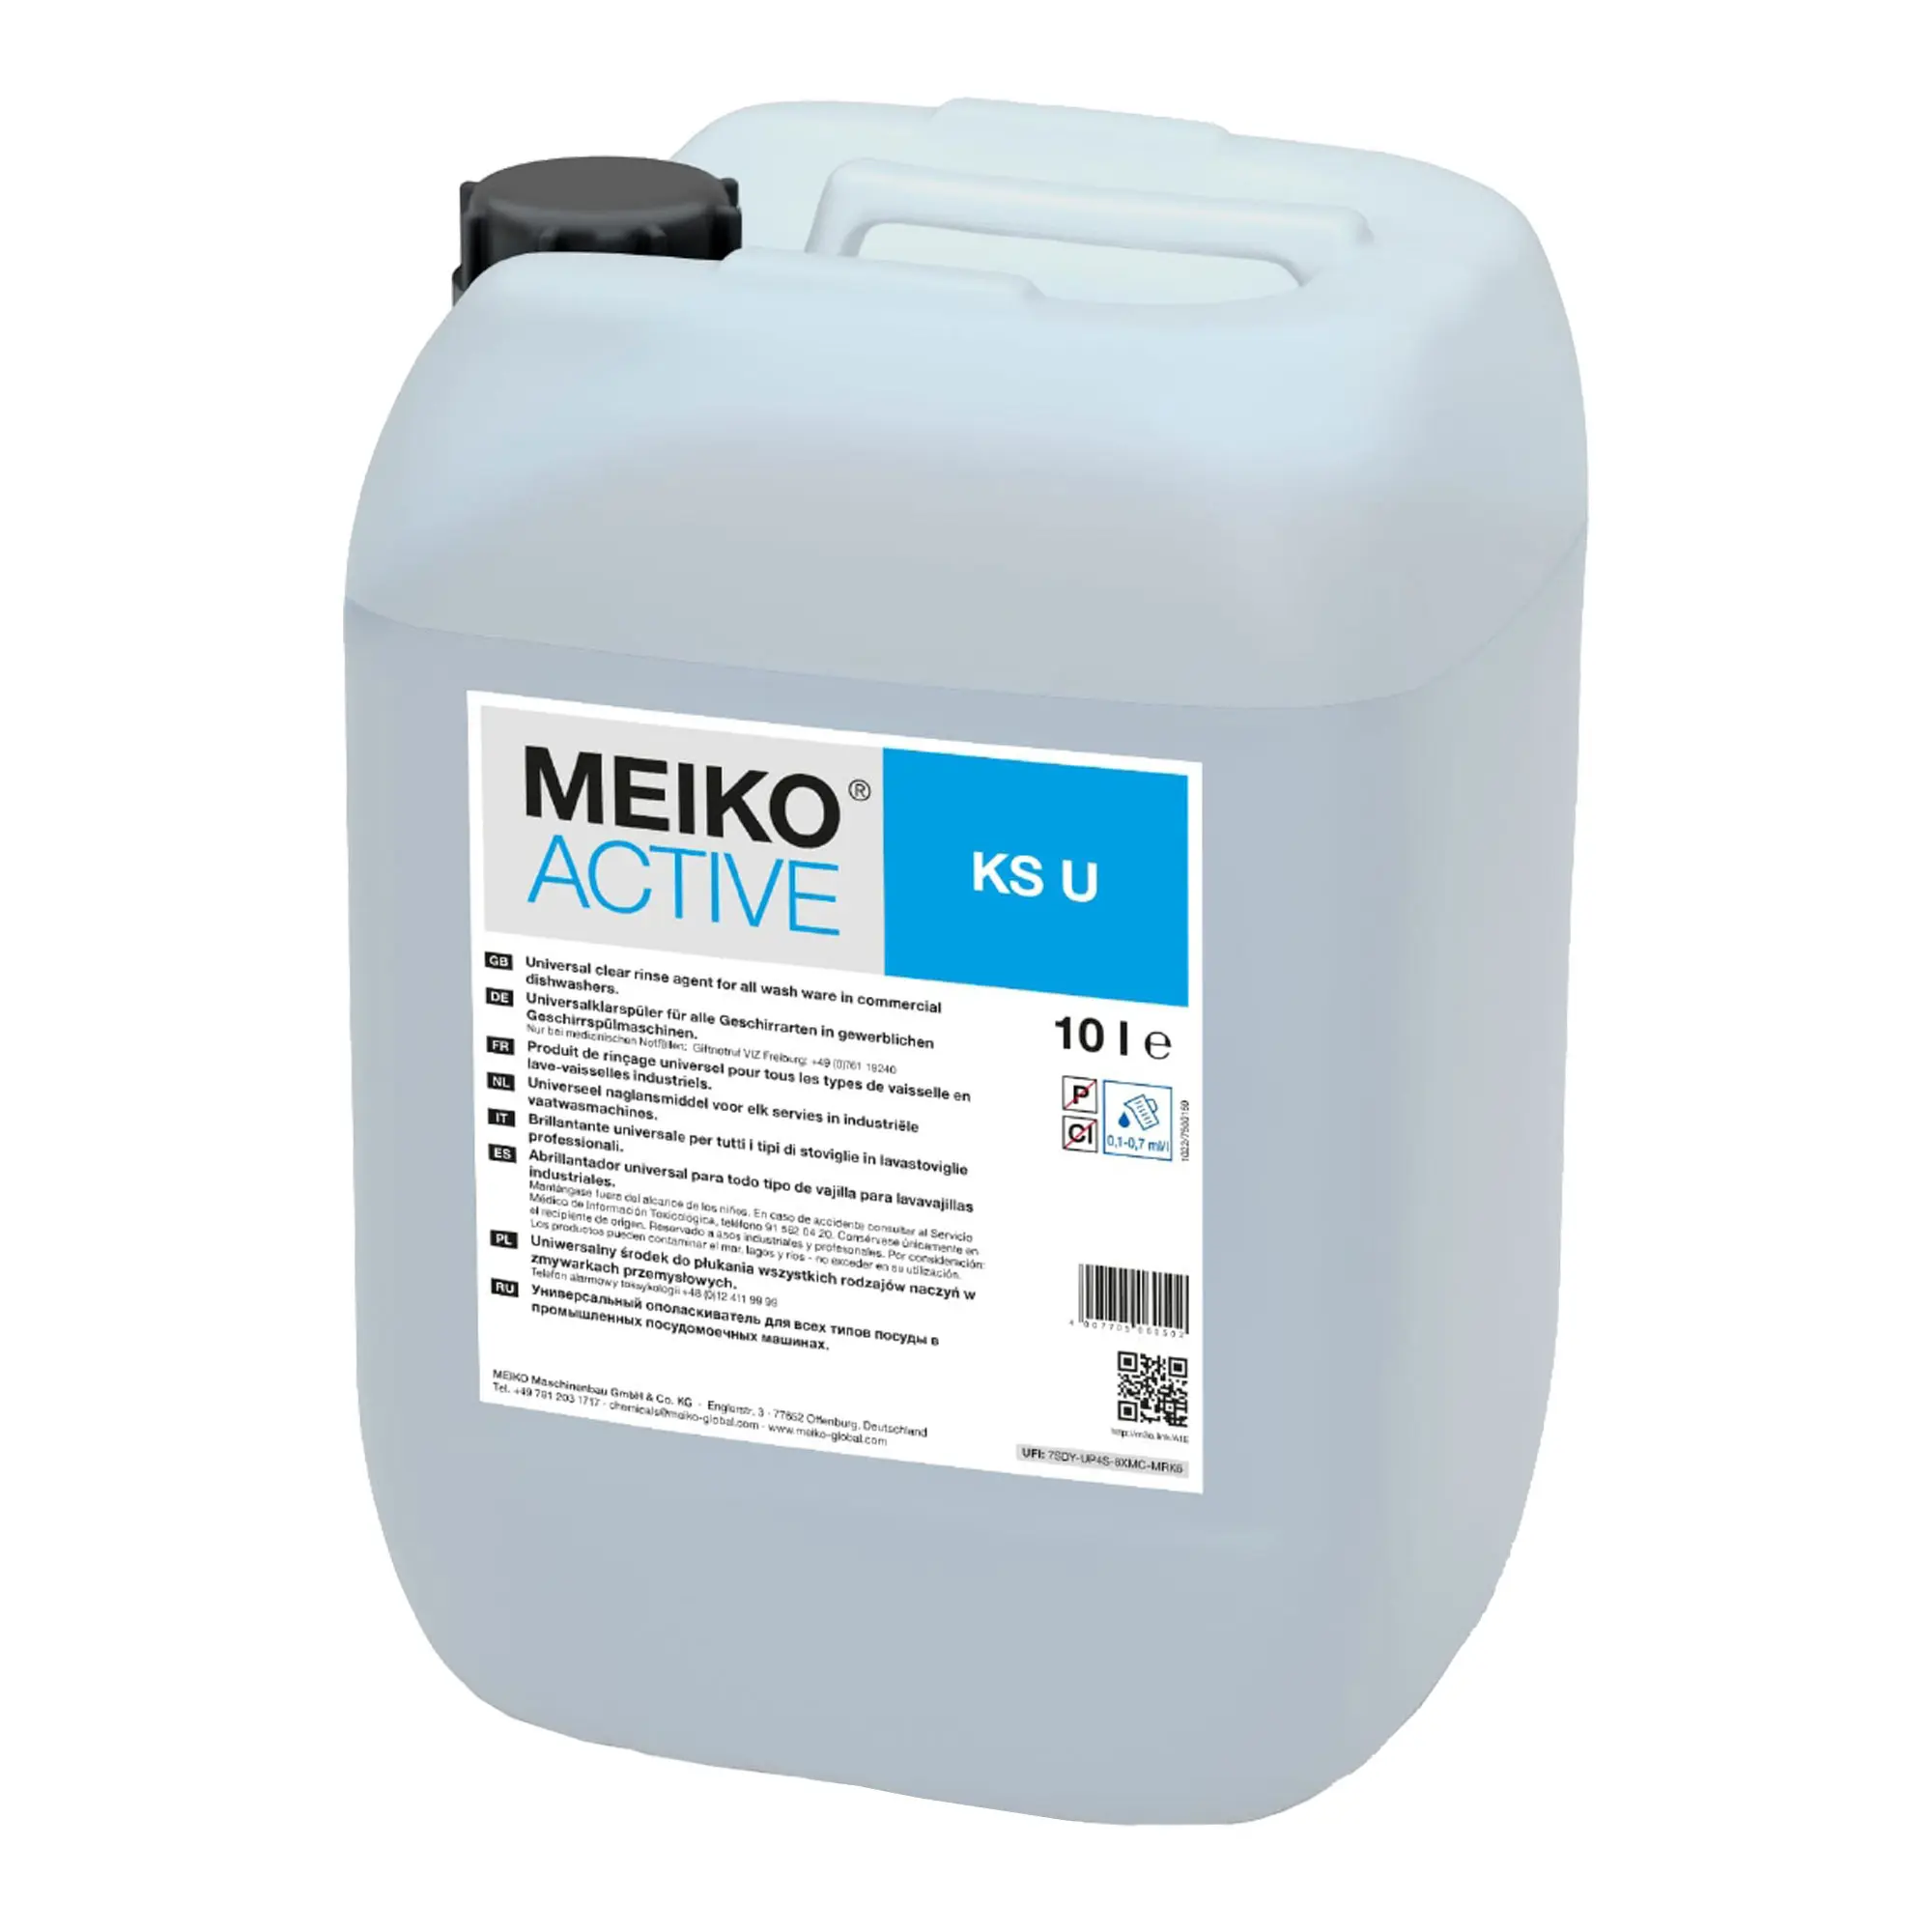 Meiko Active KS U Klarspüler